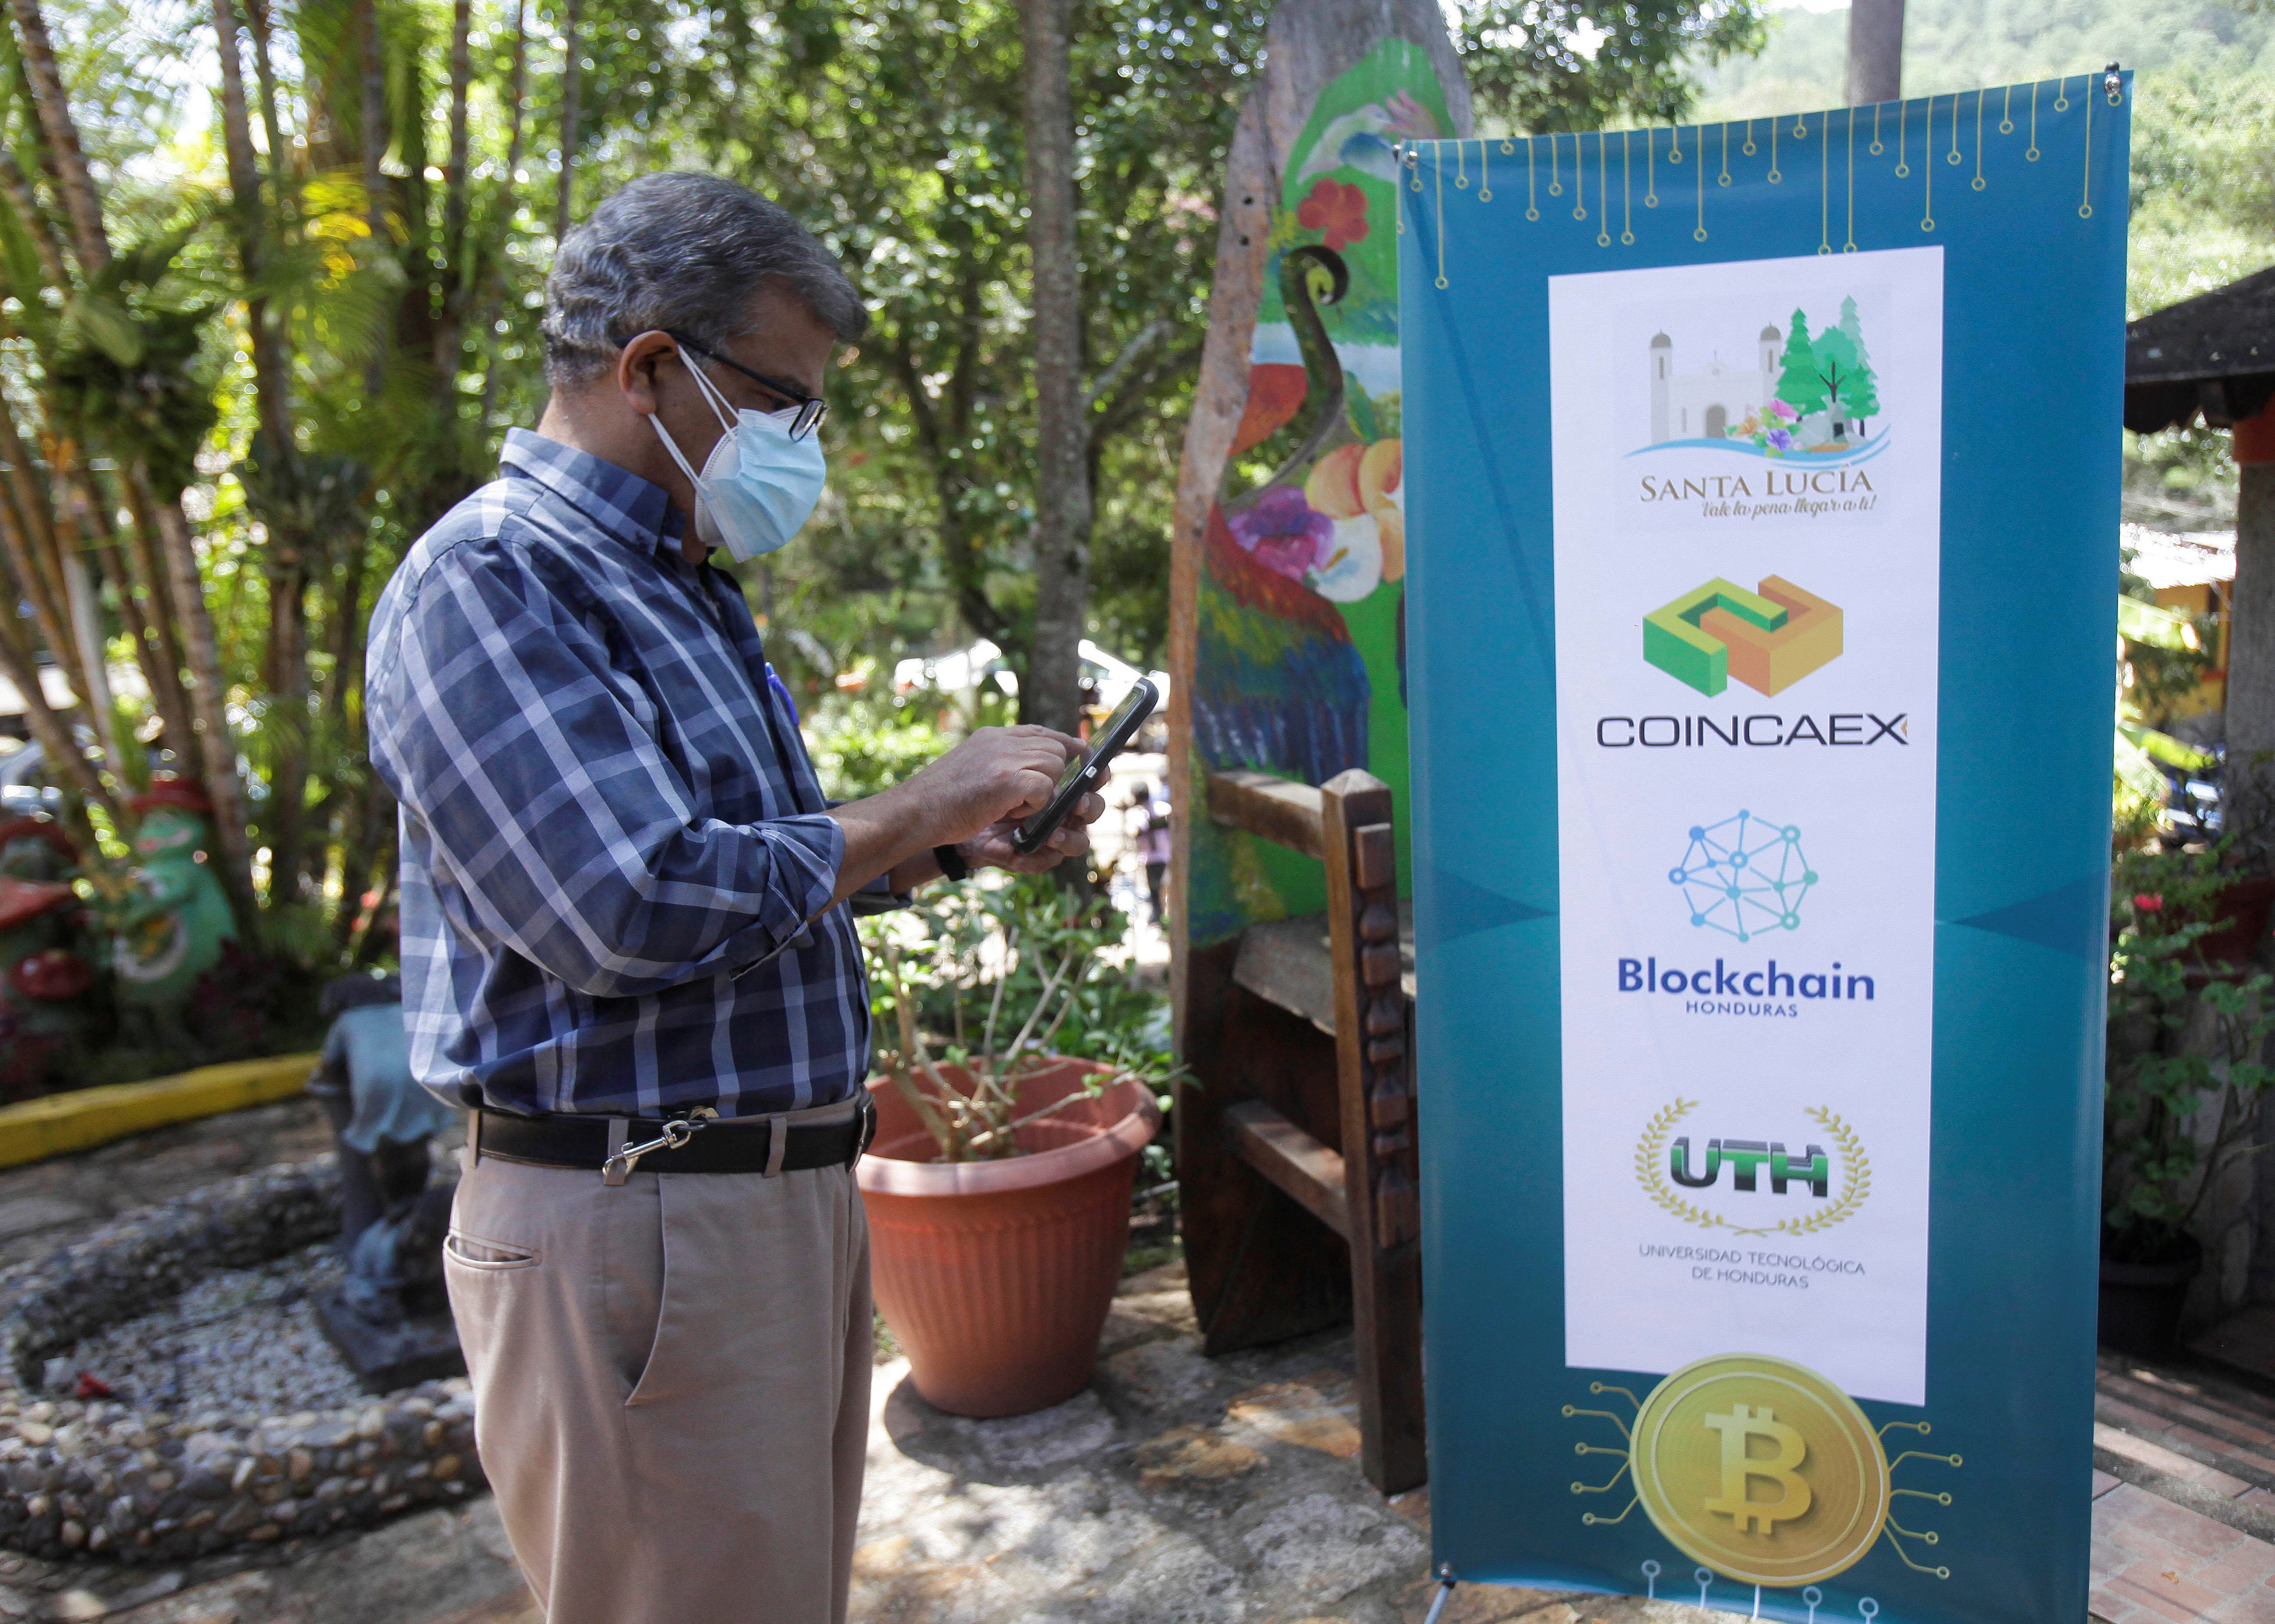 The city of Santa Lucia kicks off its Bitcoin project called 'Bitcoin Valley'